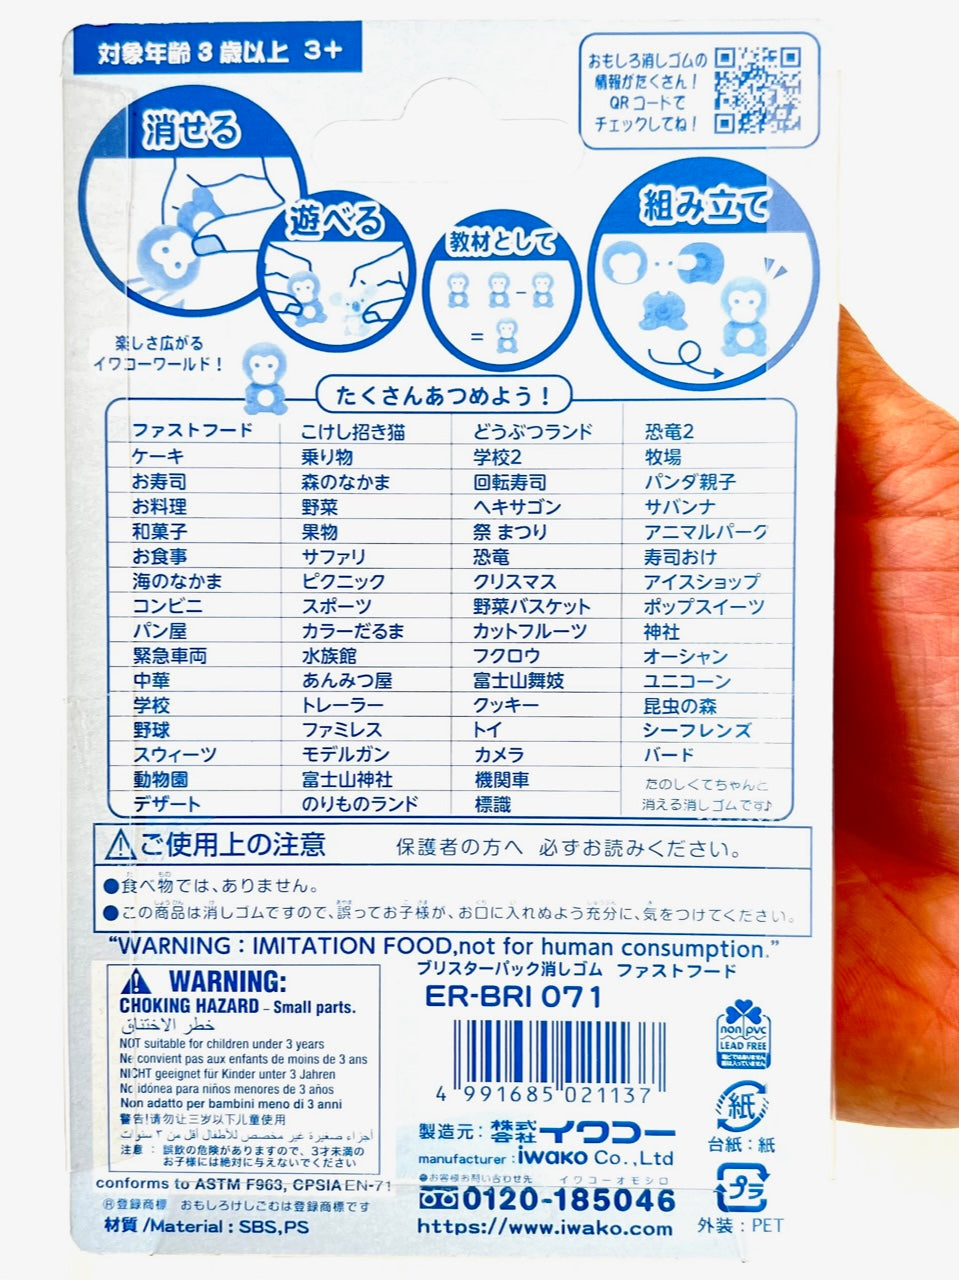 38331 IWAKO FAST FOOD ERASER CARD-10 CARDS